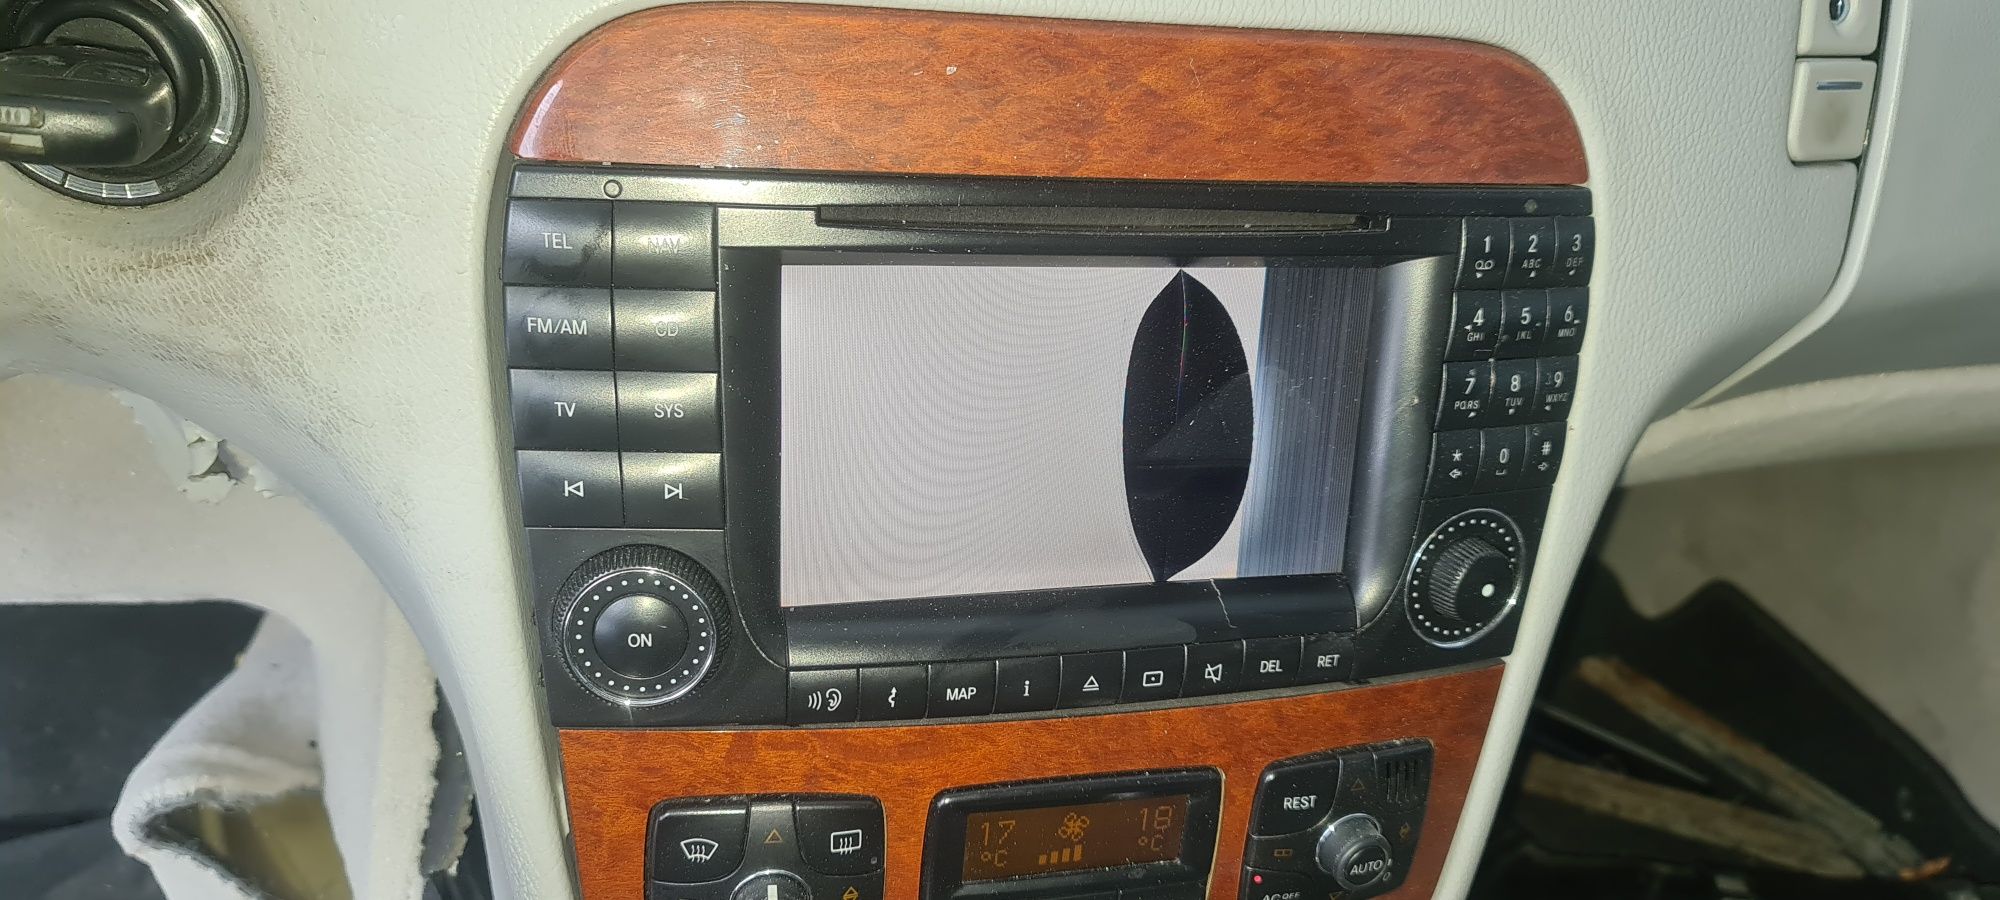 Radio Comand Navi Mercedes W220 W215 LIFT